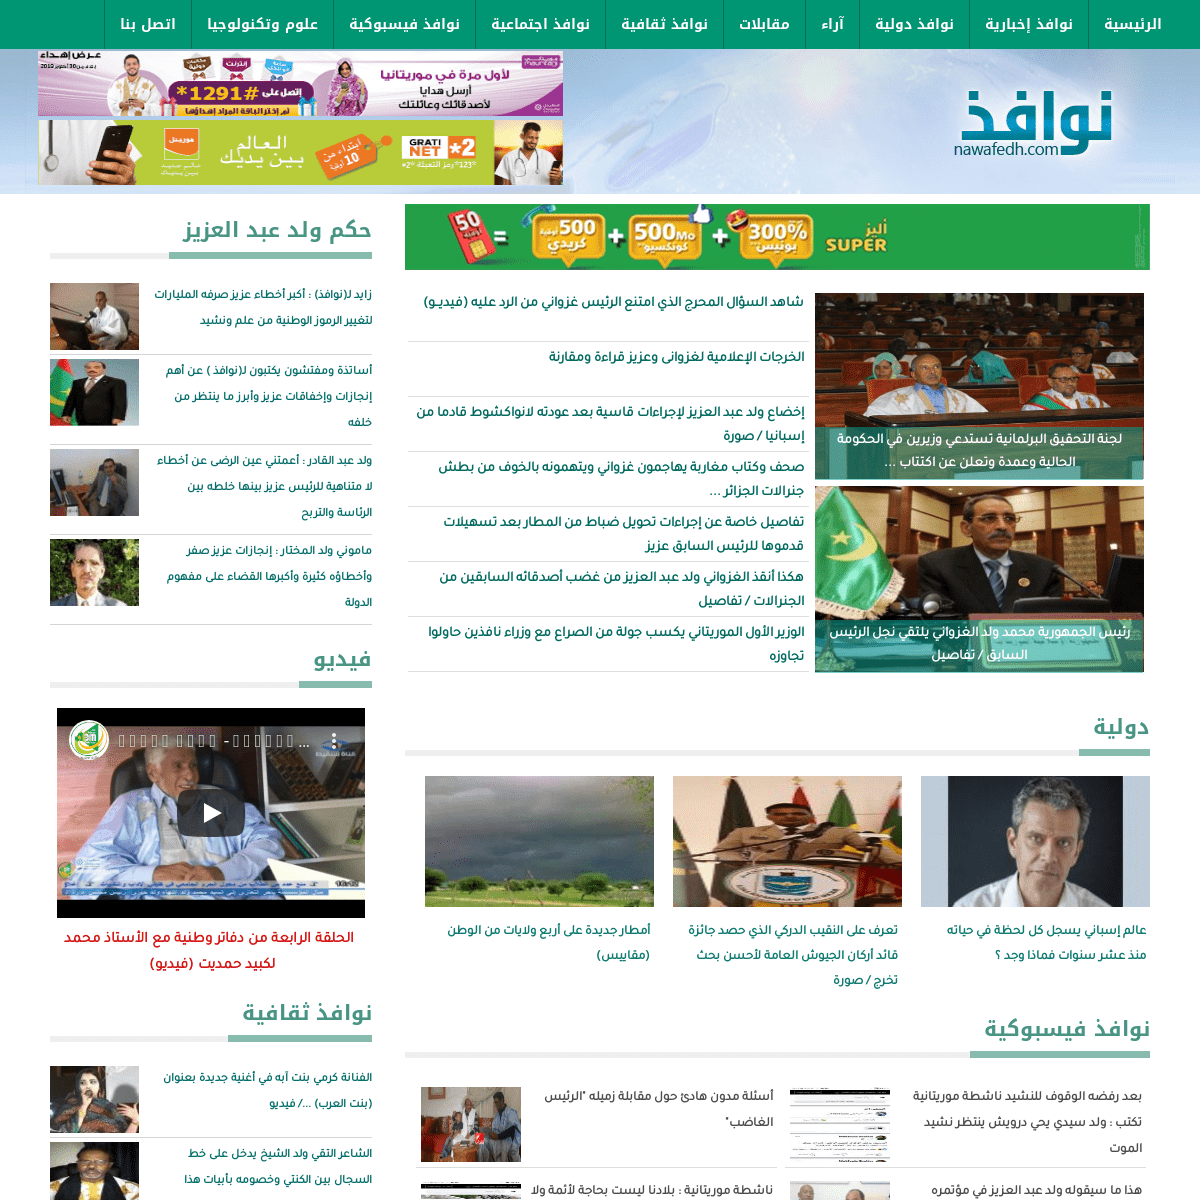 A complete backup of nawafedh.com